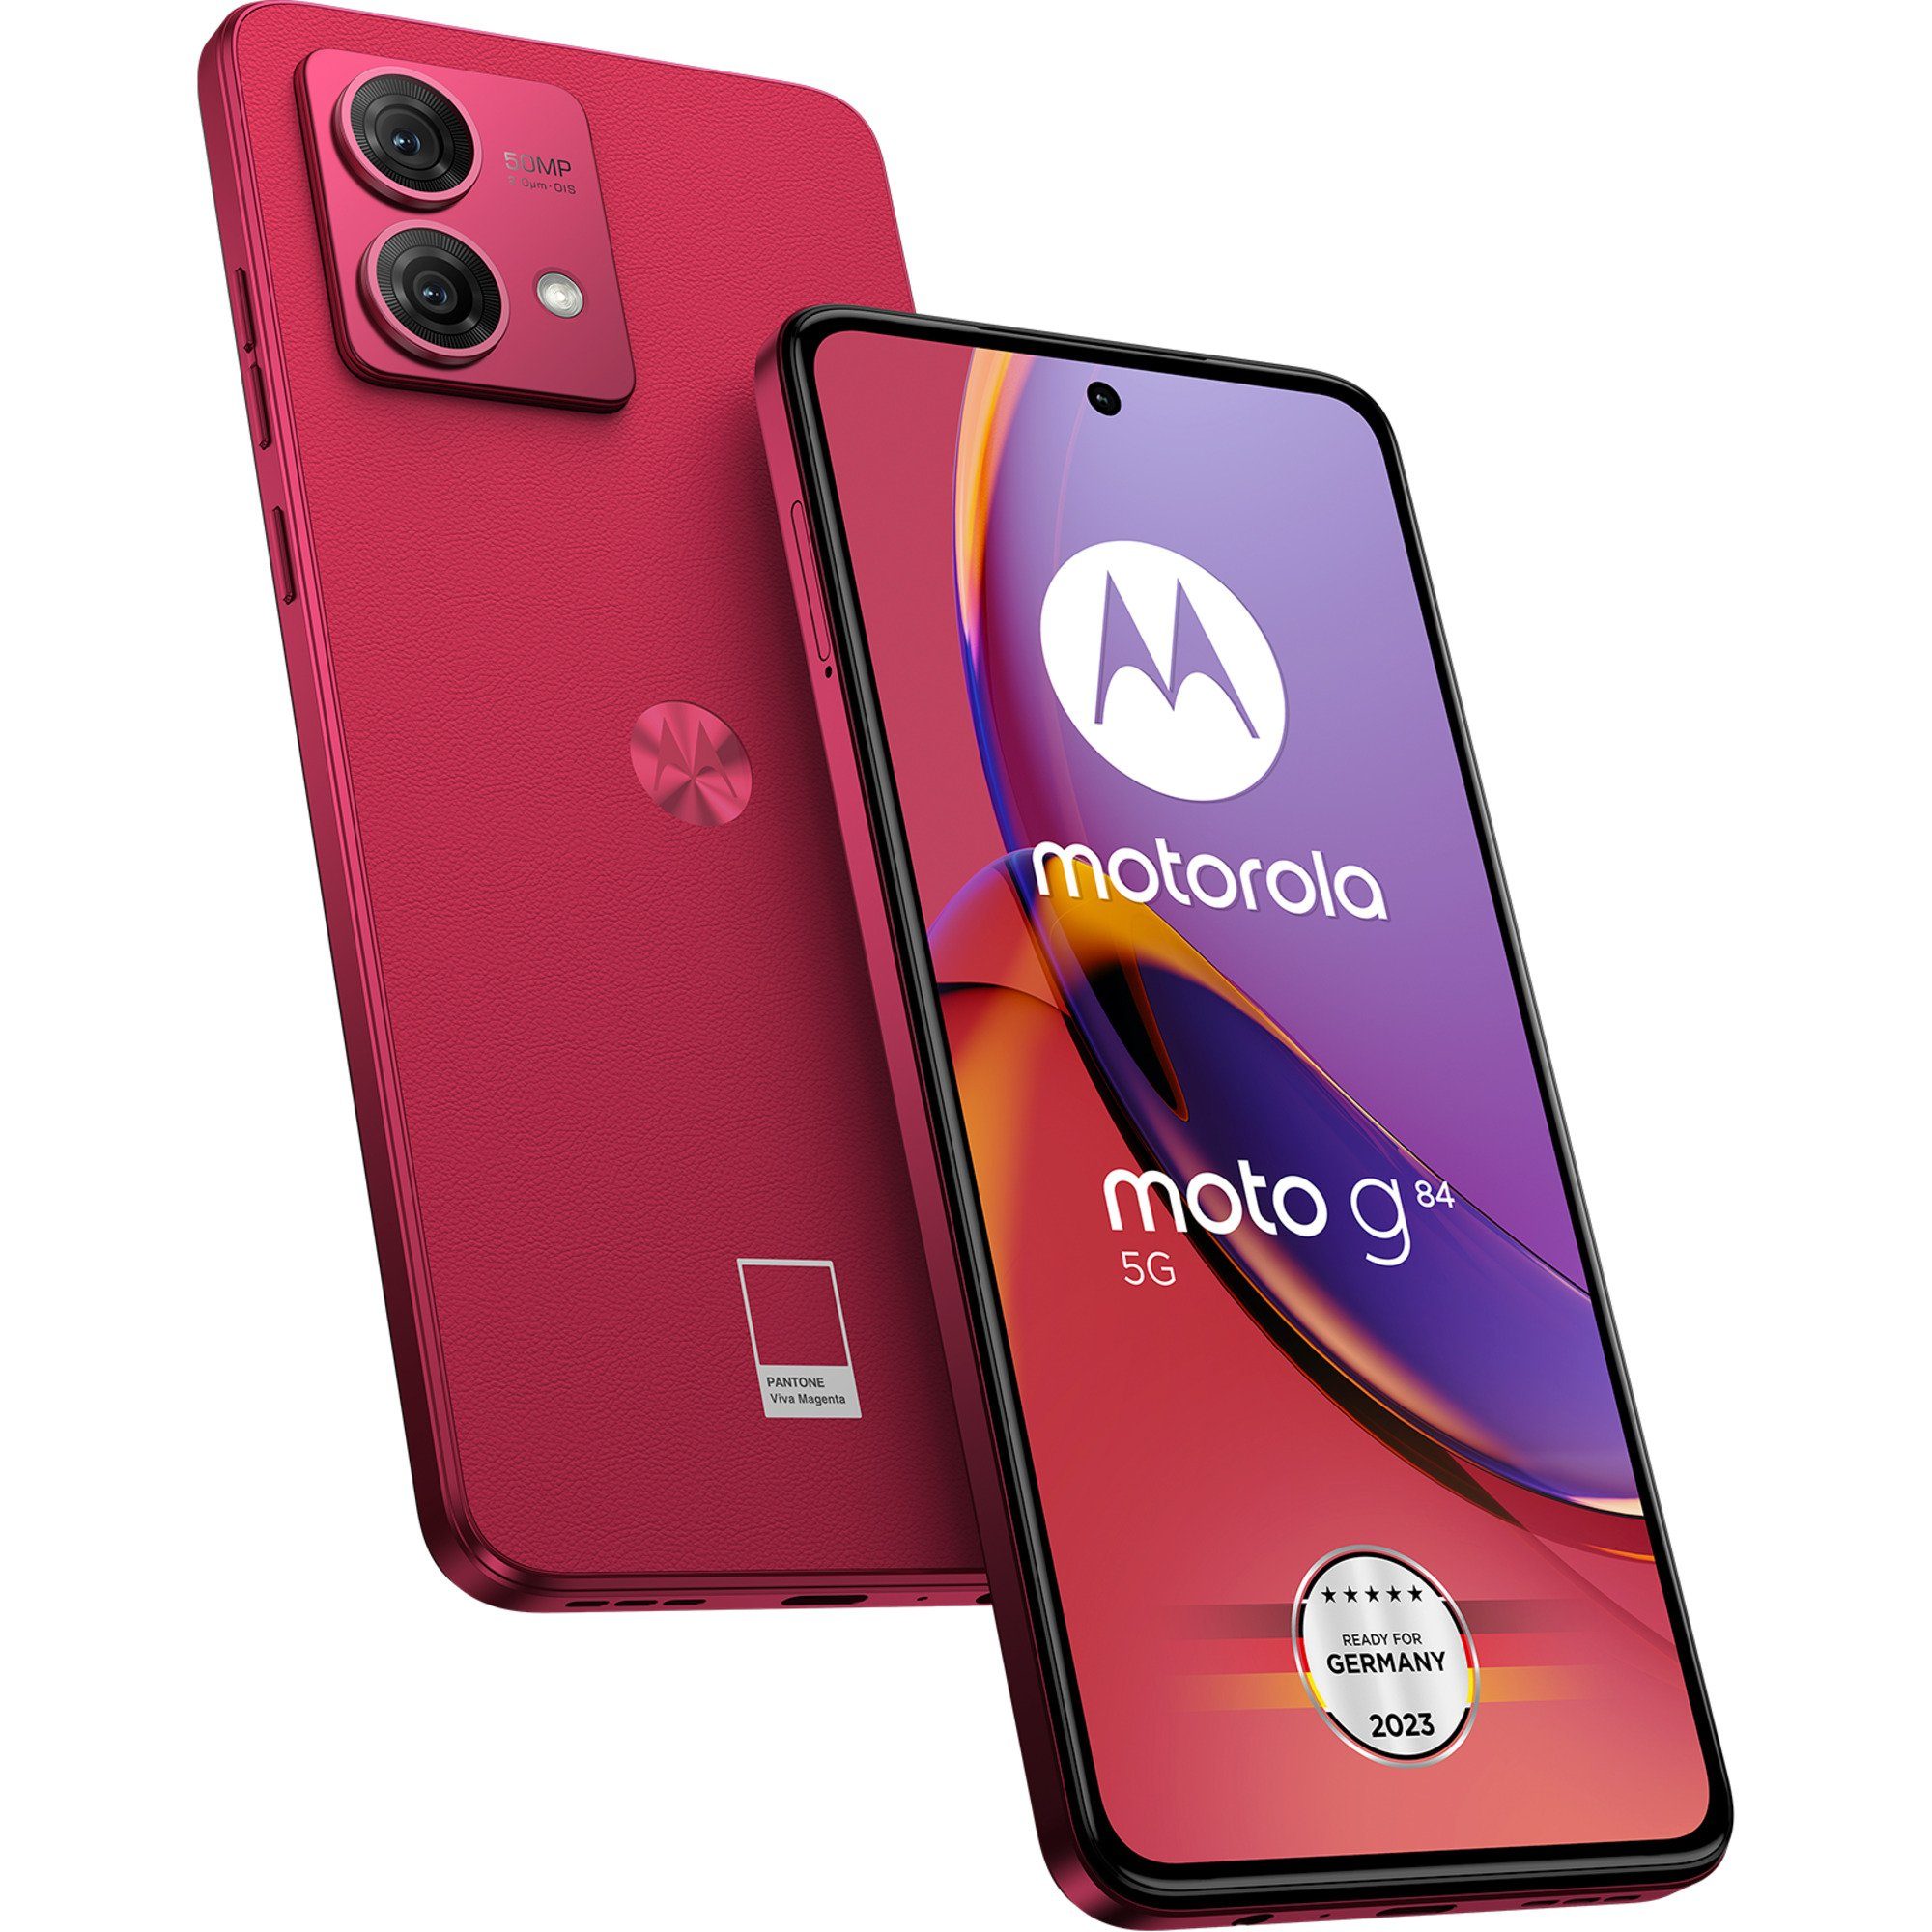 Motorola Motorola g84 5G 256GB, Handy, (Viva Magenta, Smartphone (50 MP MP Kamera)